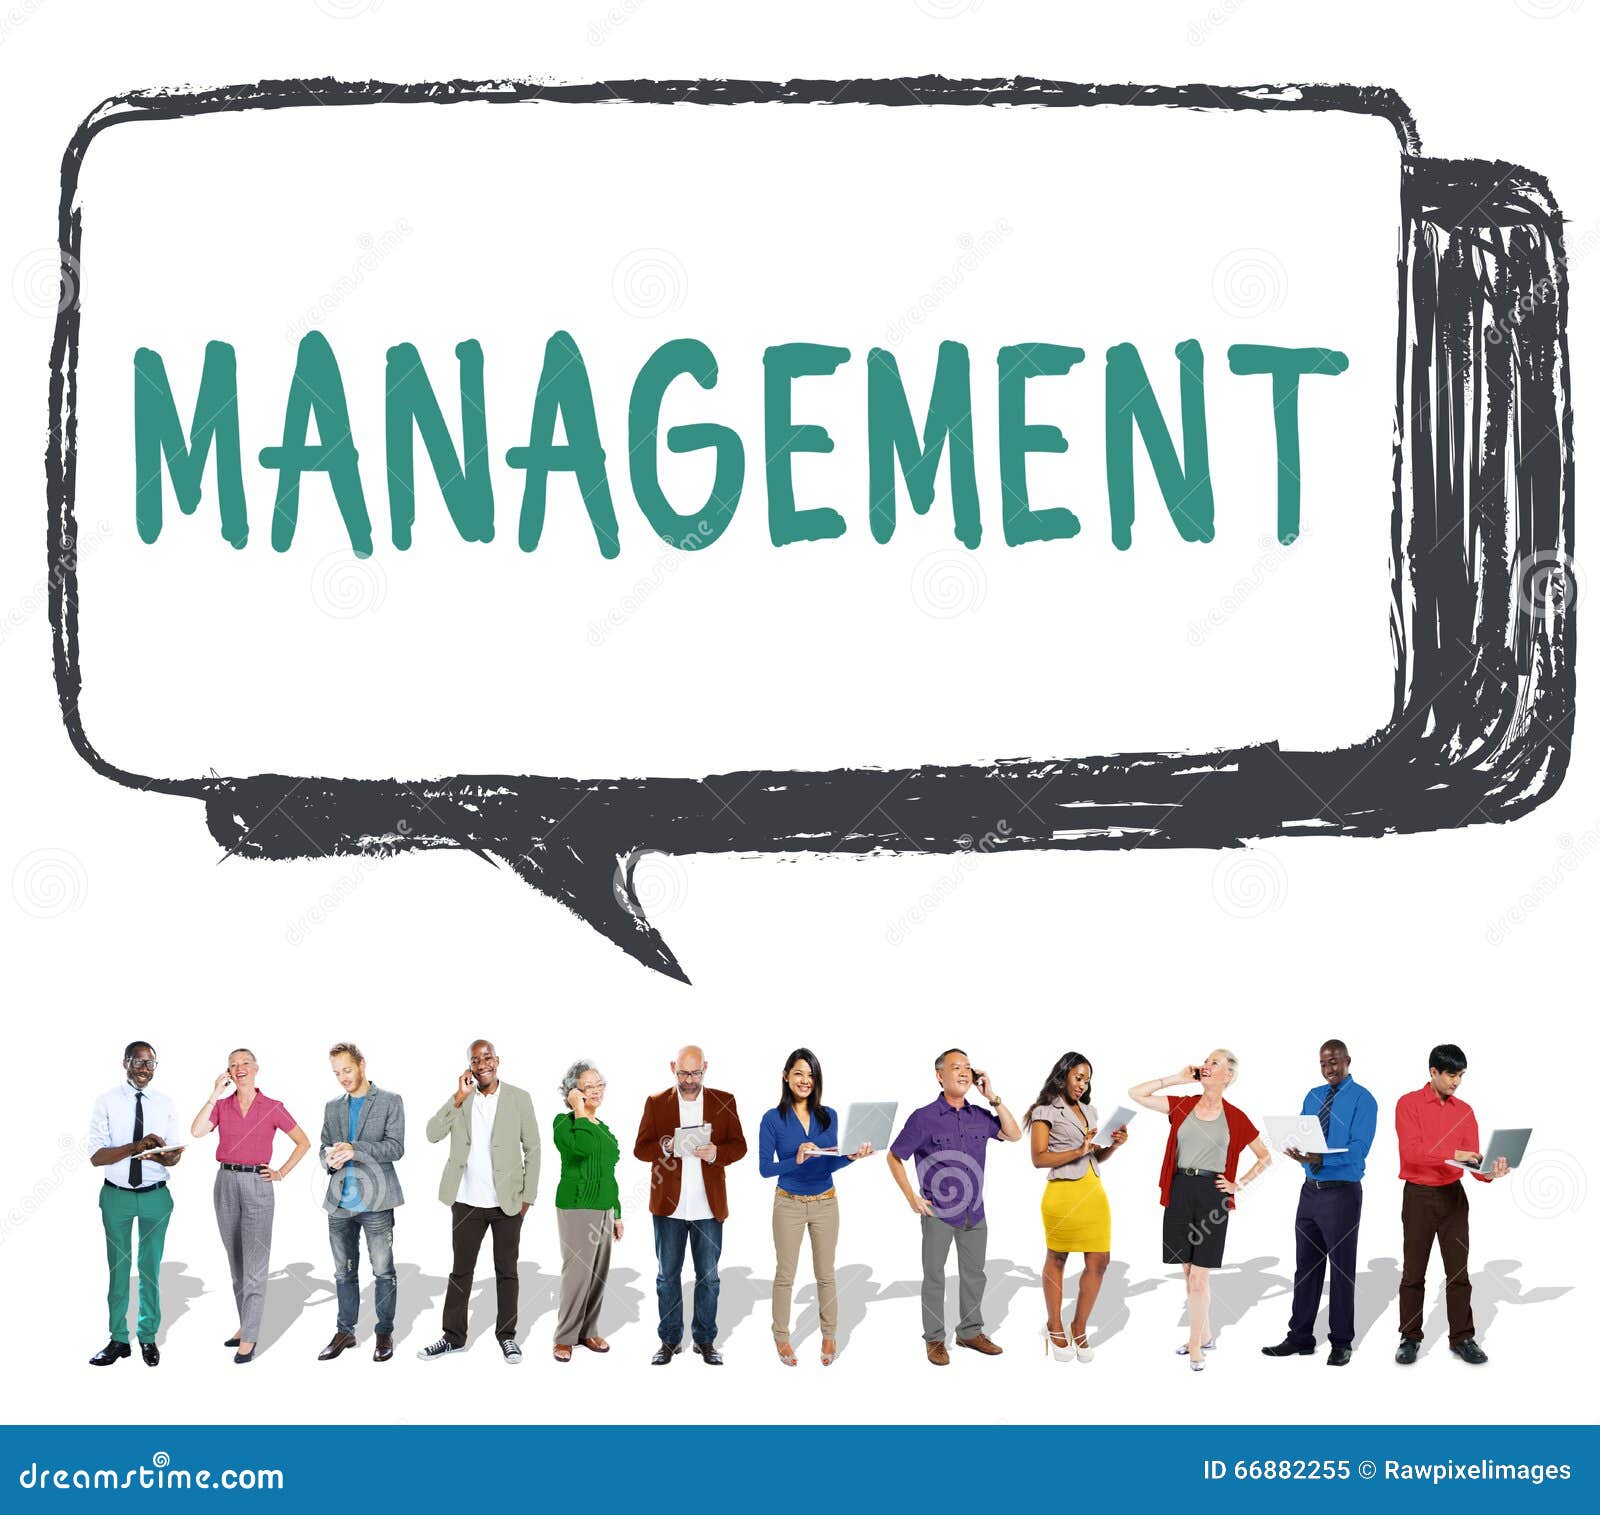 management organization director managing customize concept